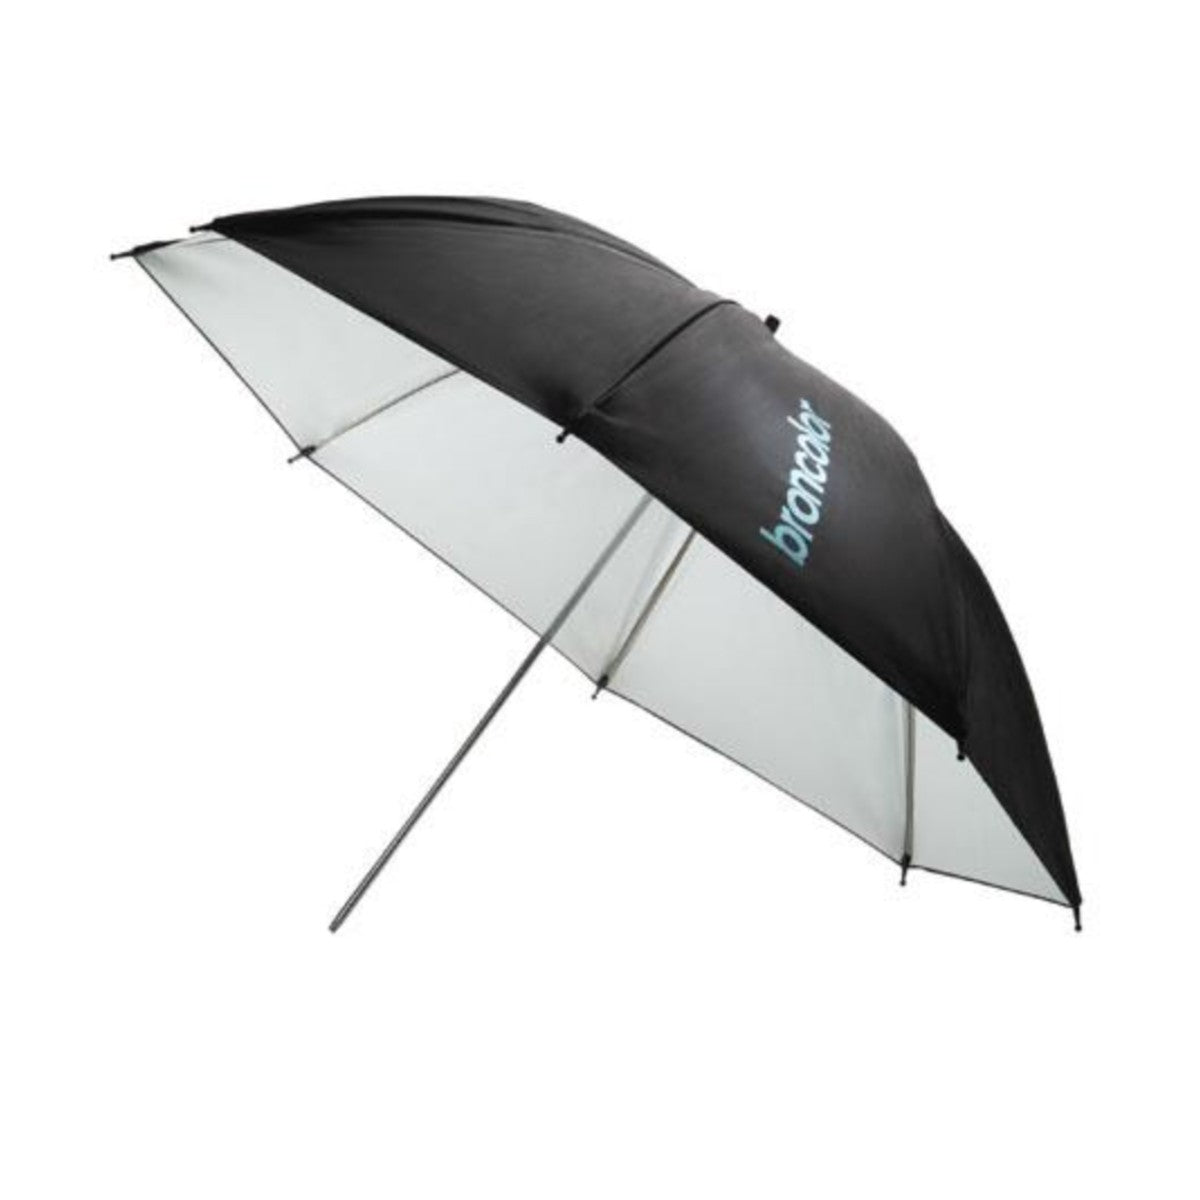 Broncolor Umbrella White/Black 105cm (41.3")